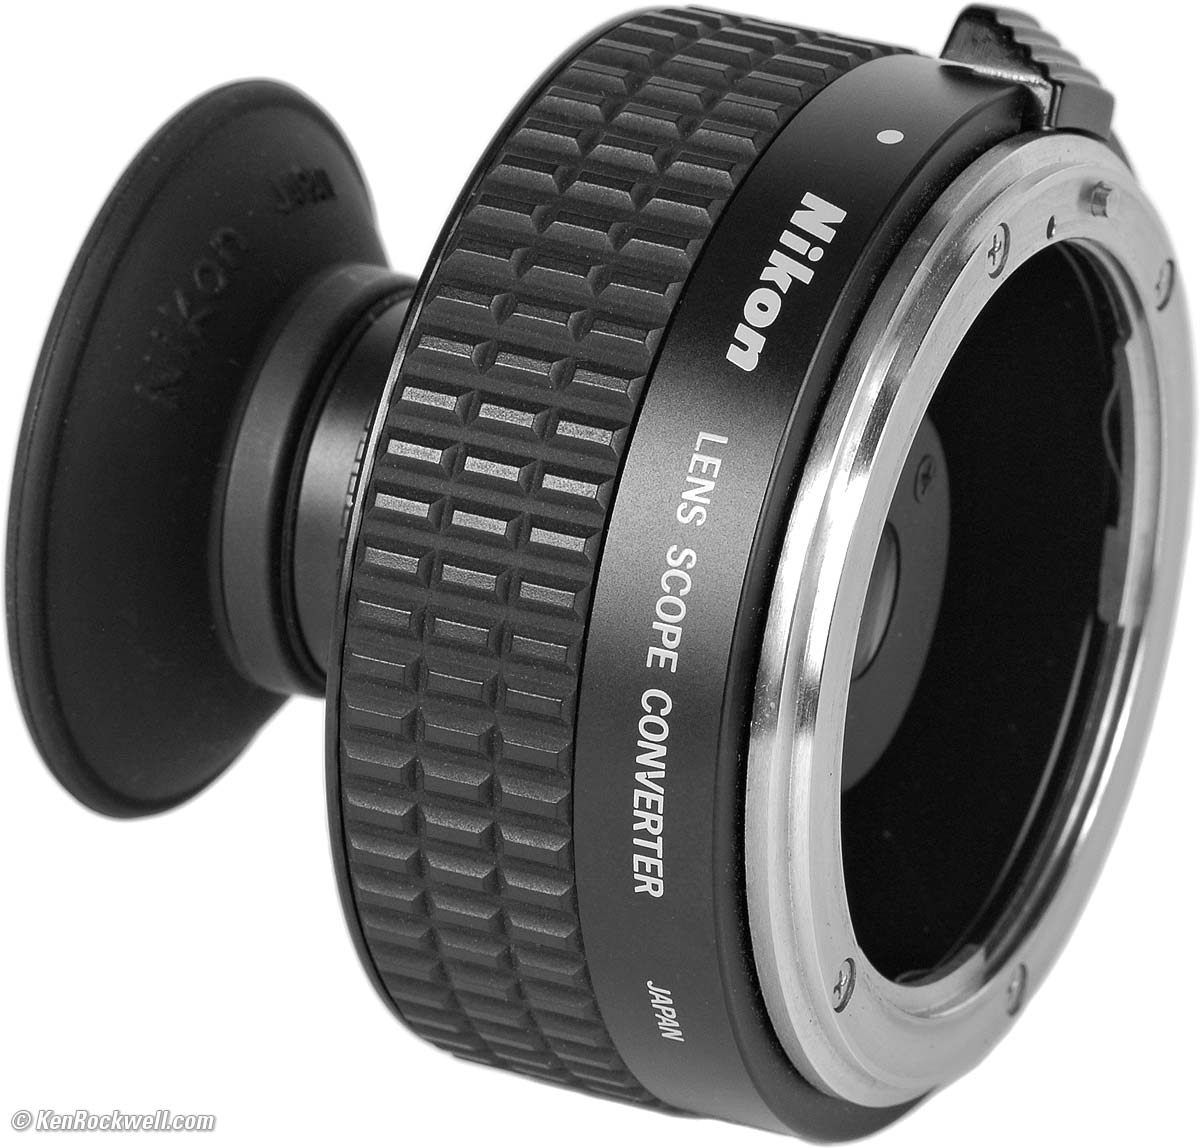 Nikon Lens Scope Converter Review by Ken Rockwell